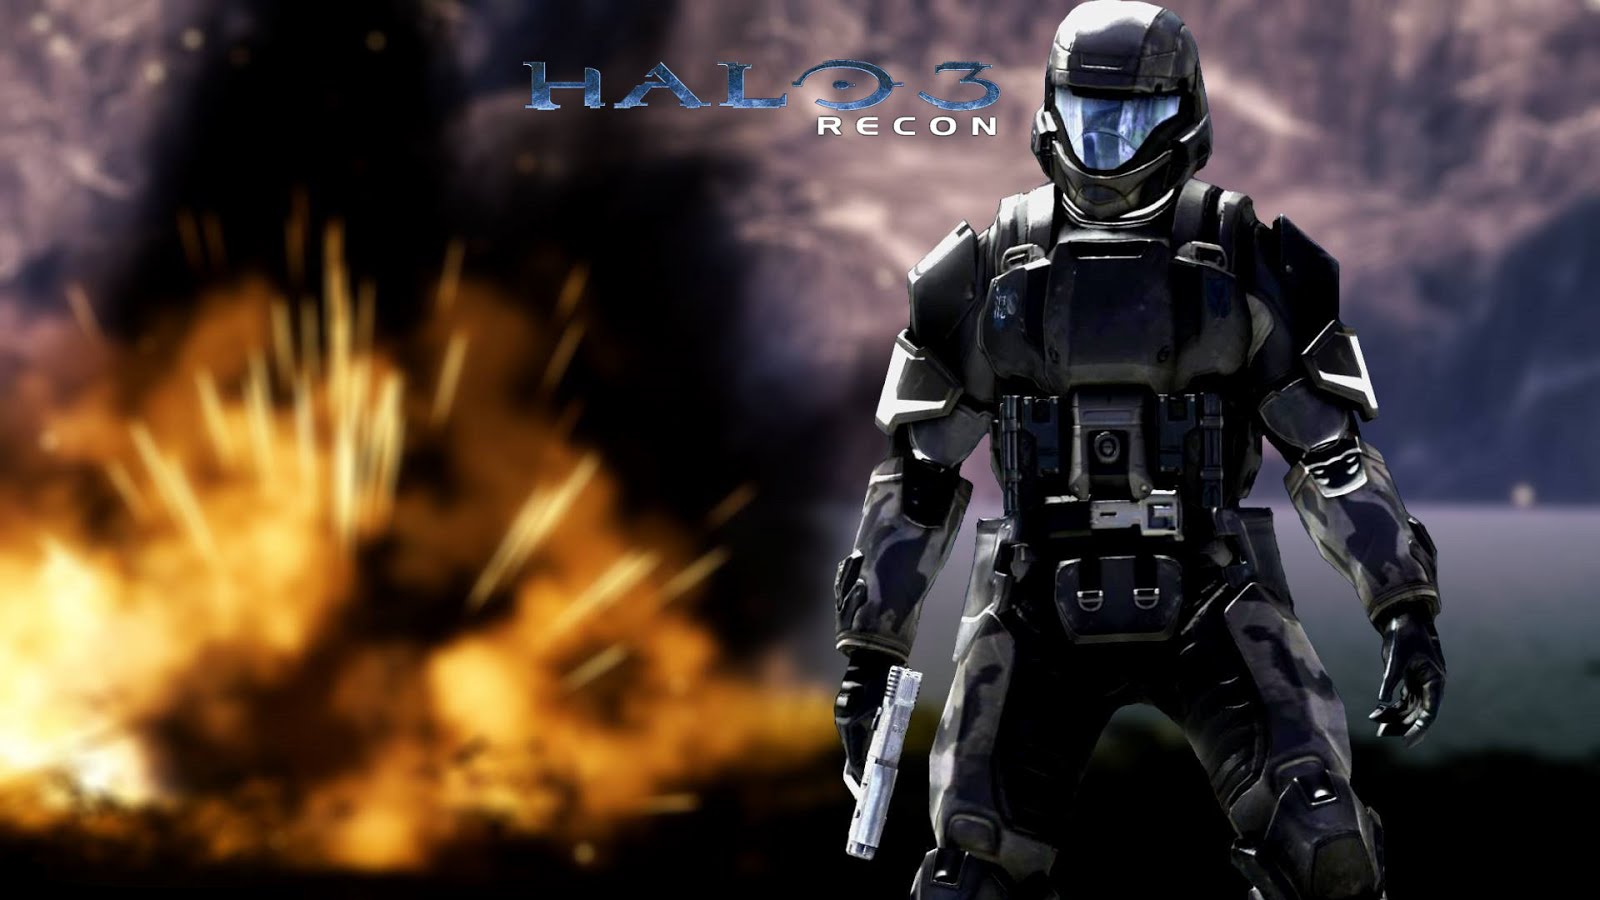 49+] Halo 5 Animated Wallpaper - WallpaperSafari